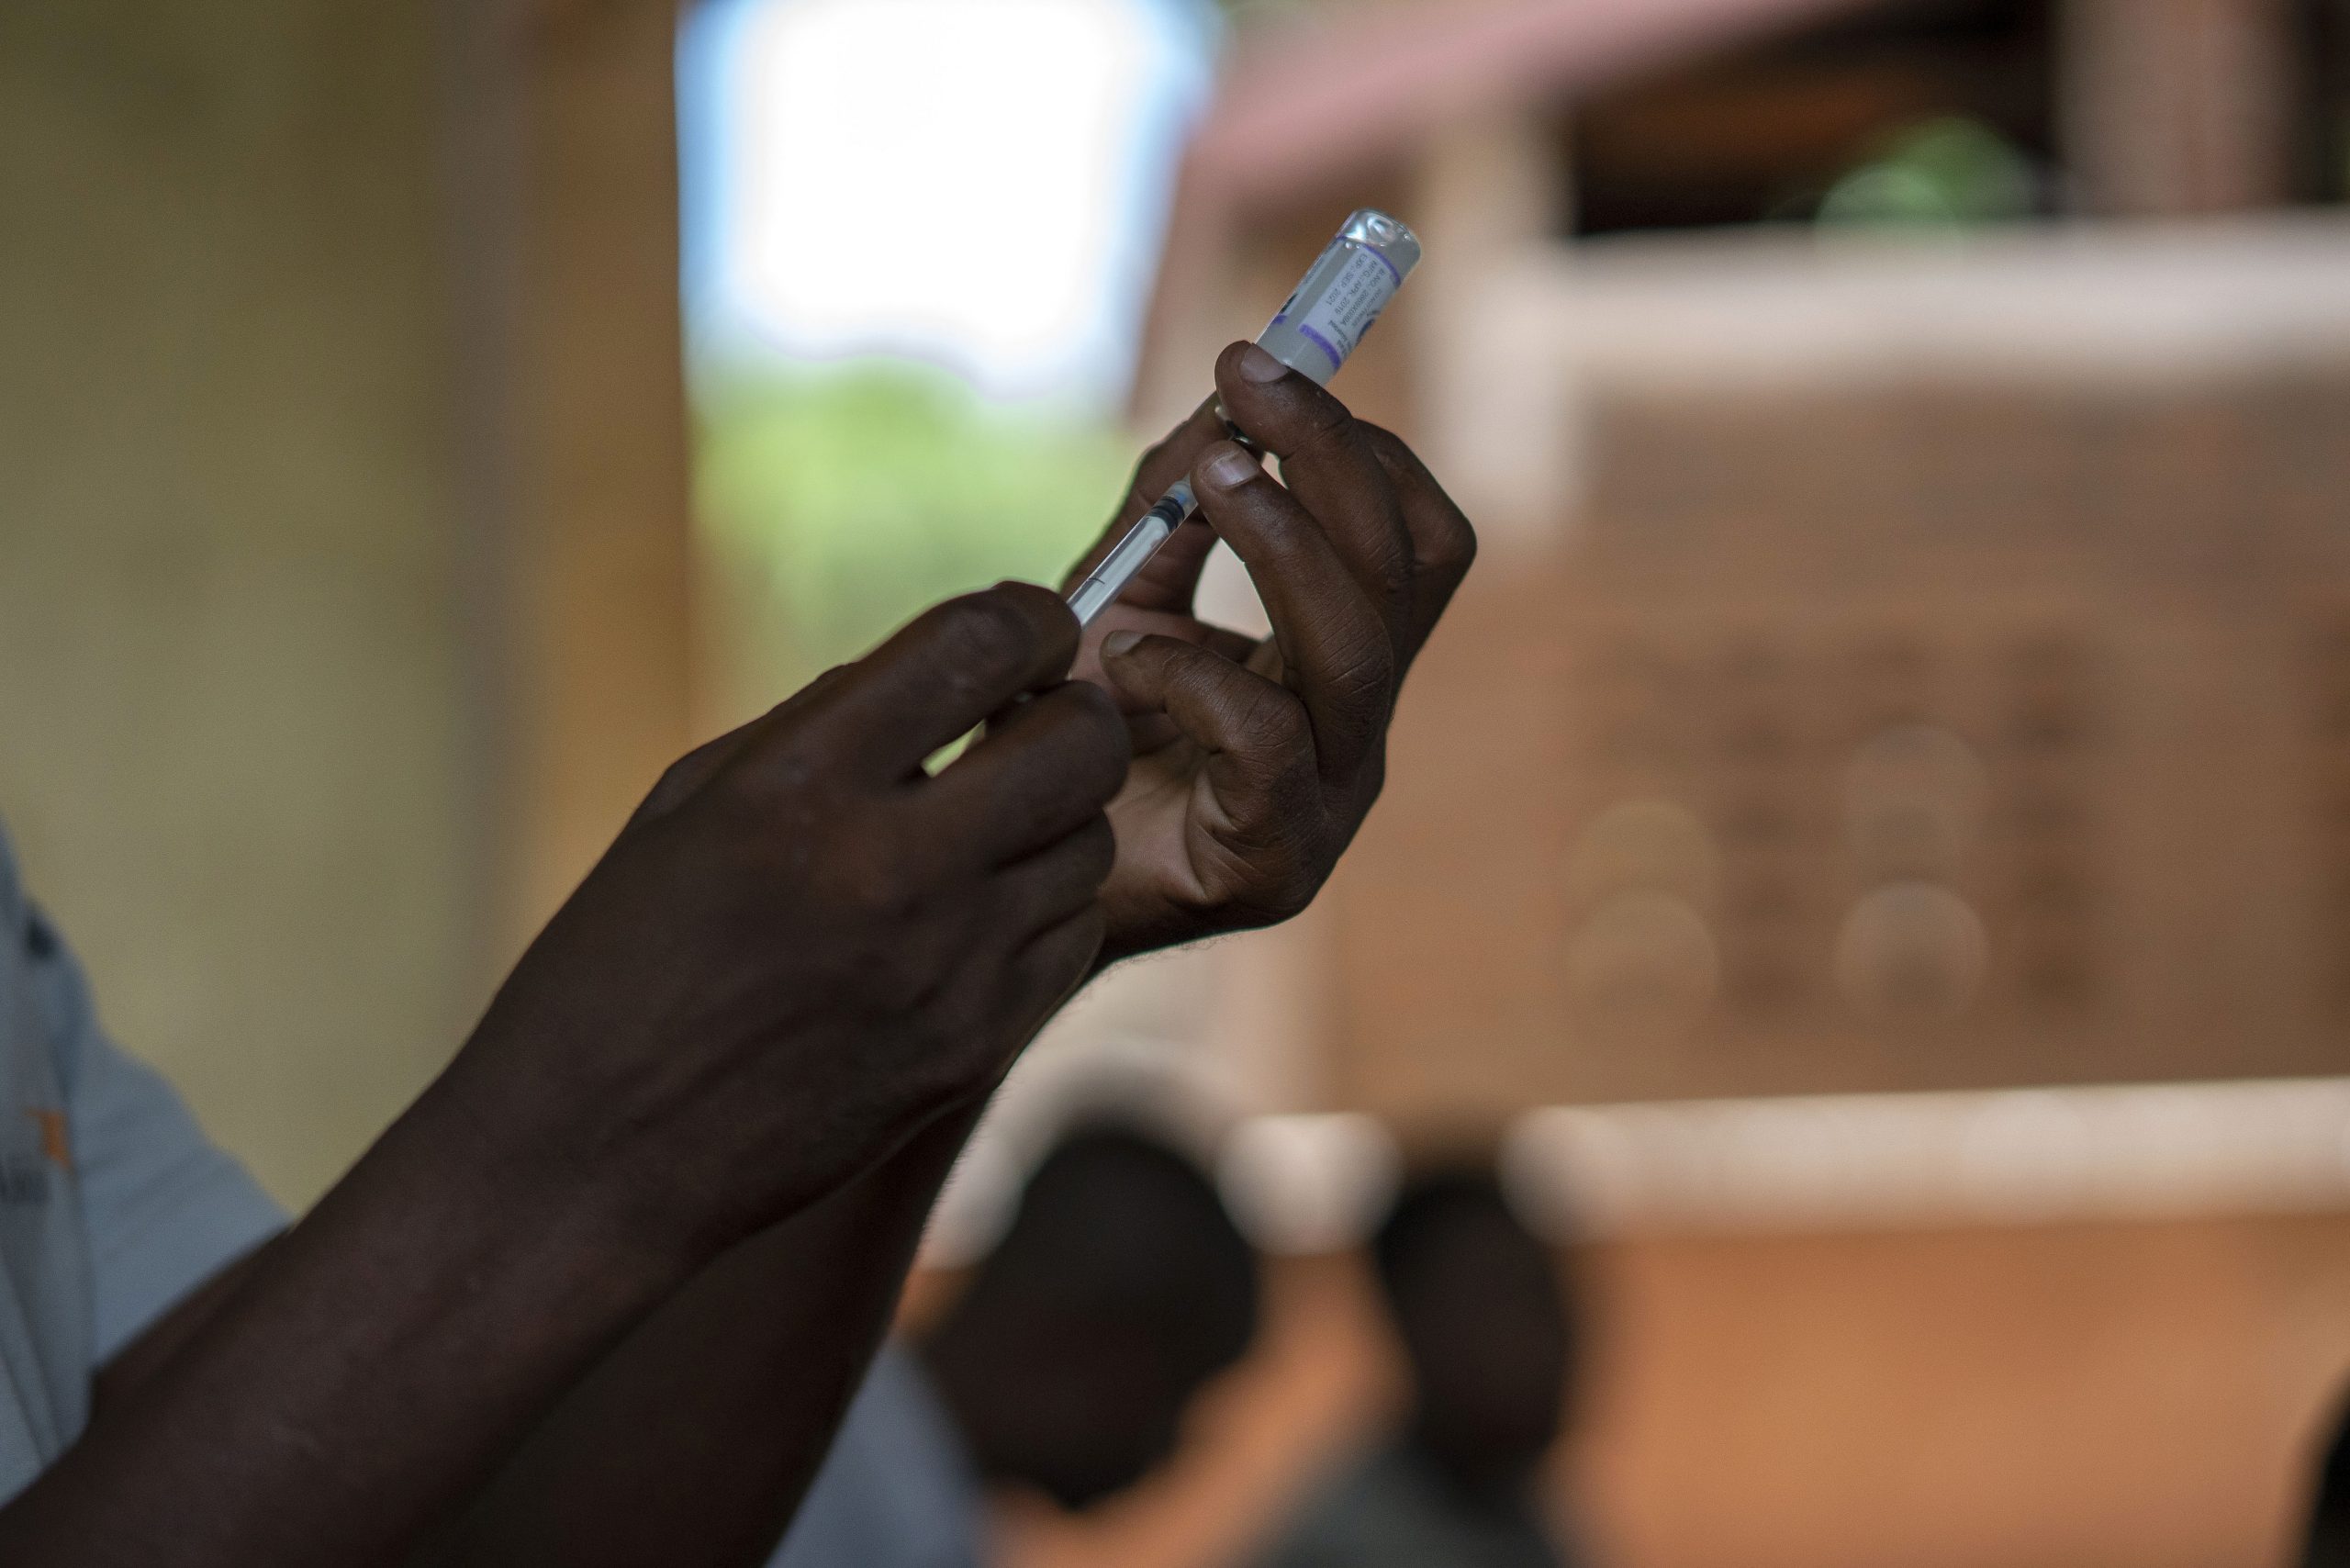 Afrika, malarija, vakcina